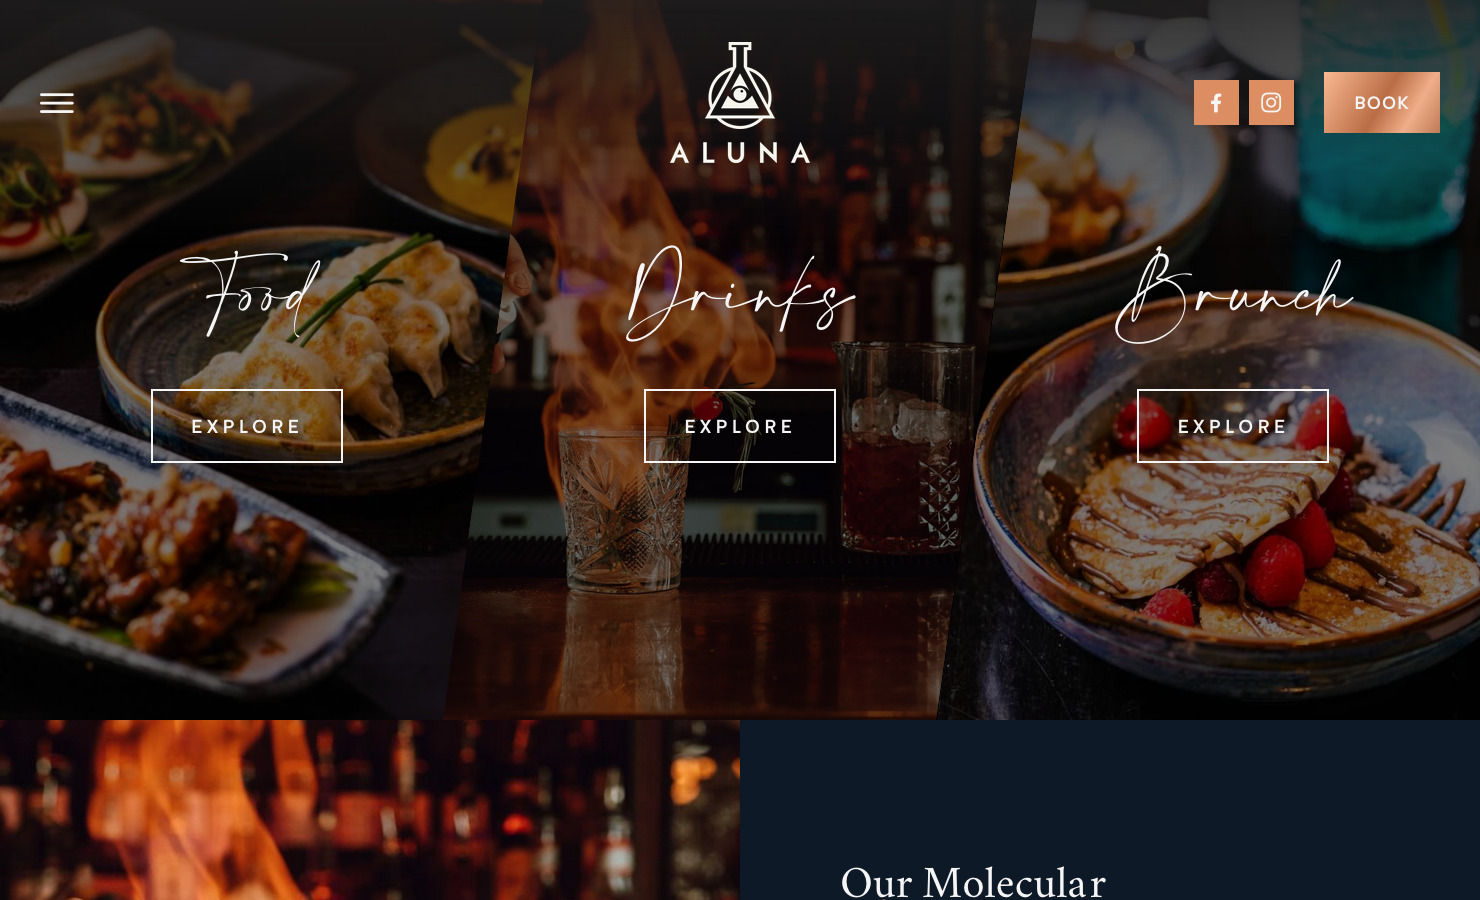 Aluna Cocktail Bar and Restaurant